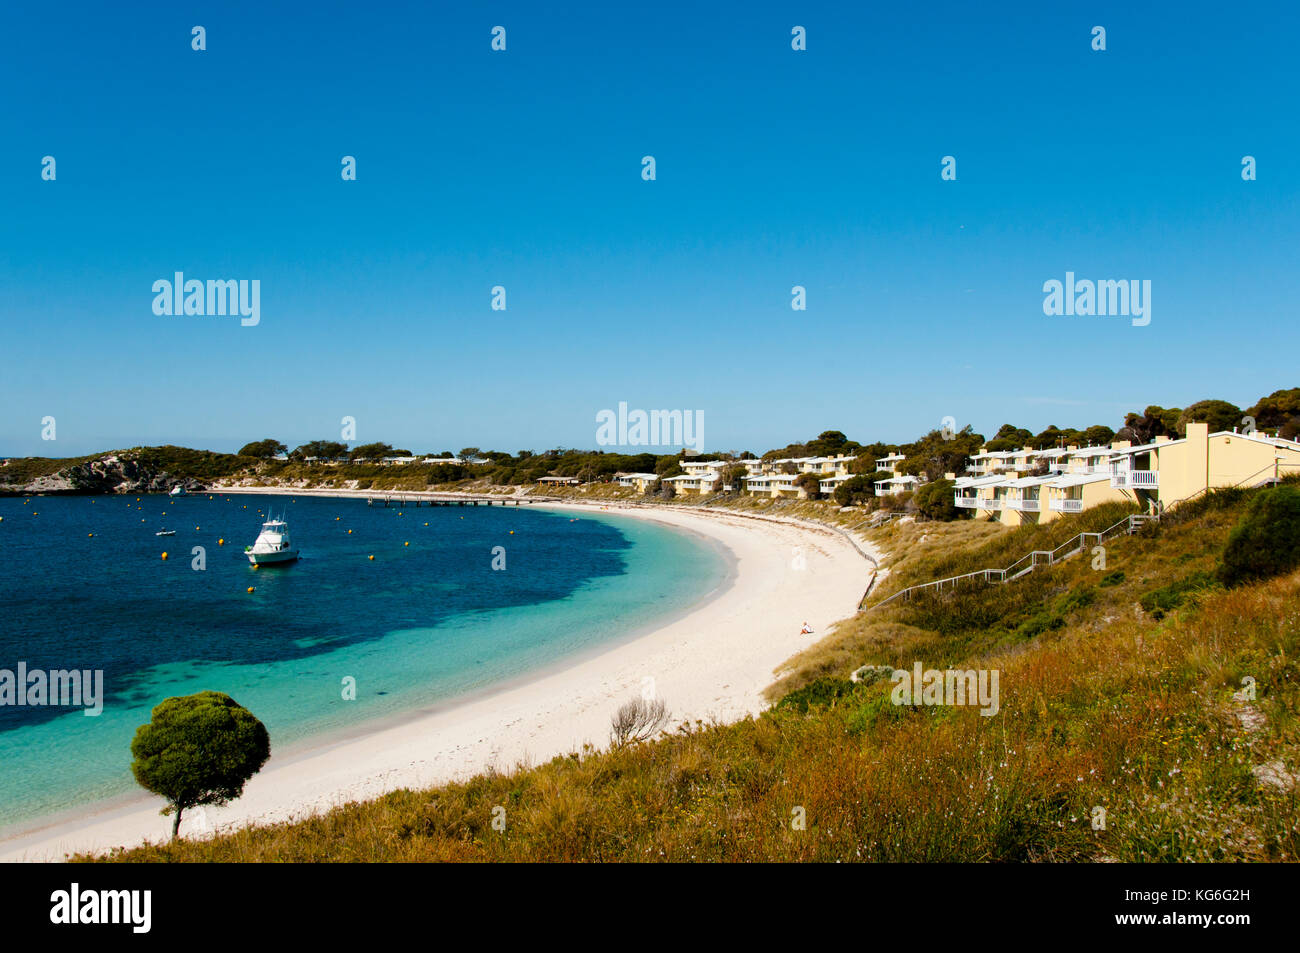 Geordie bay - Rottnest Island - Australie Banque D'Images